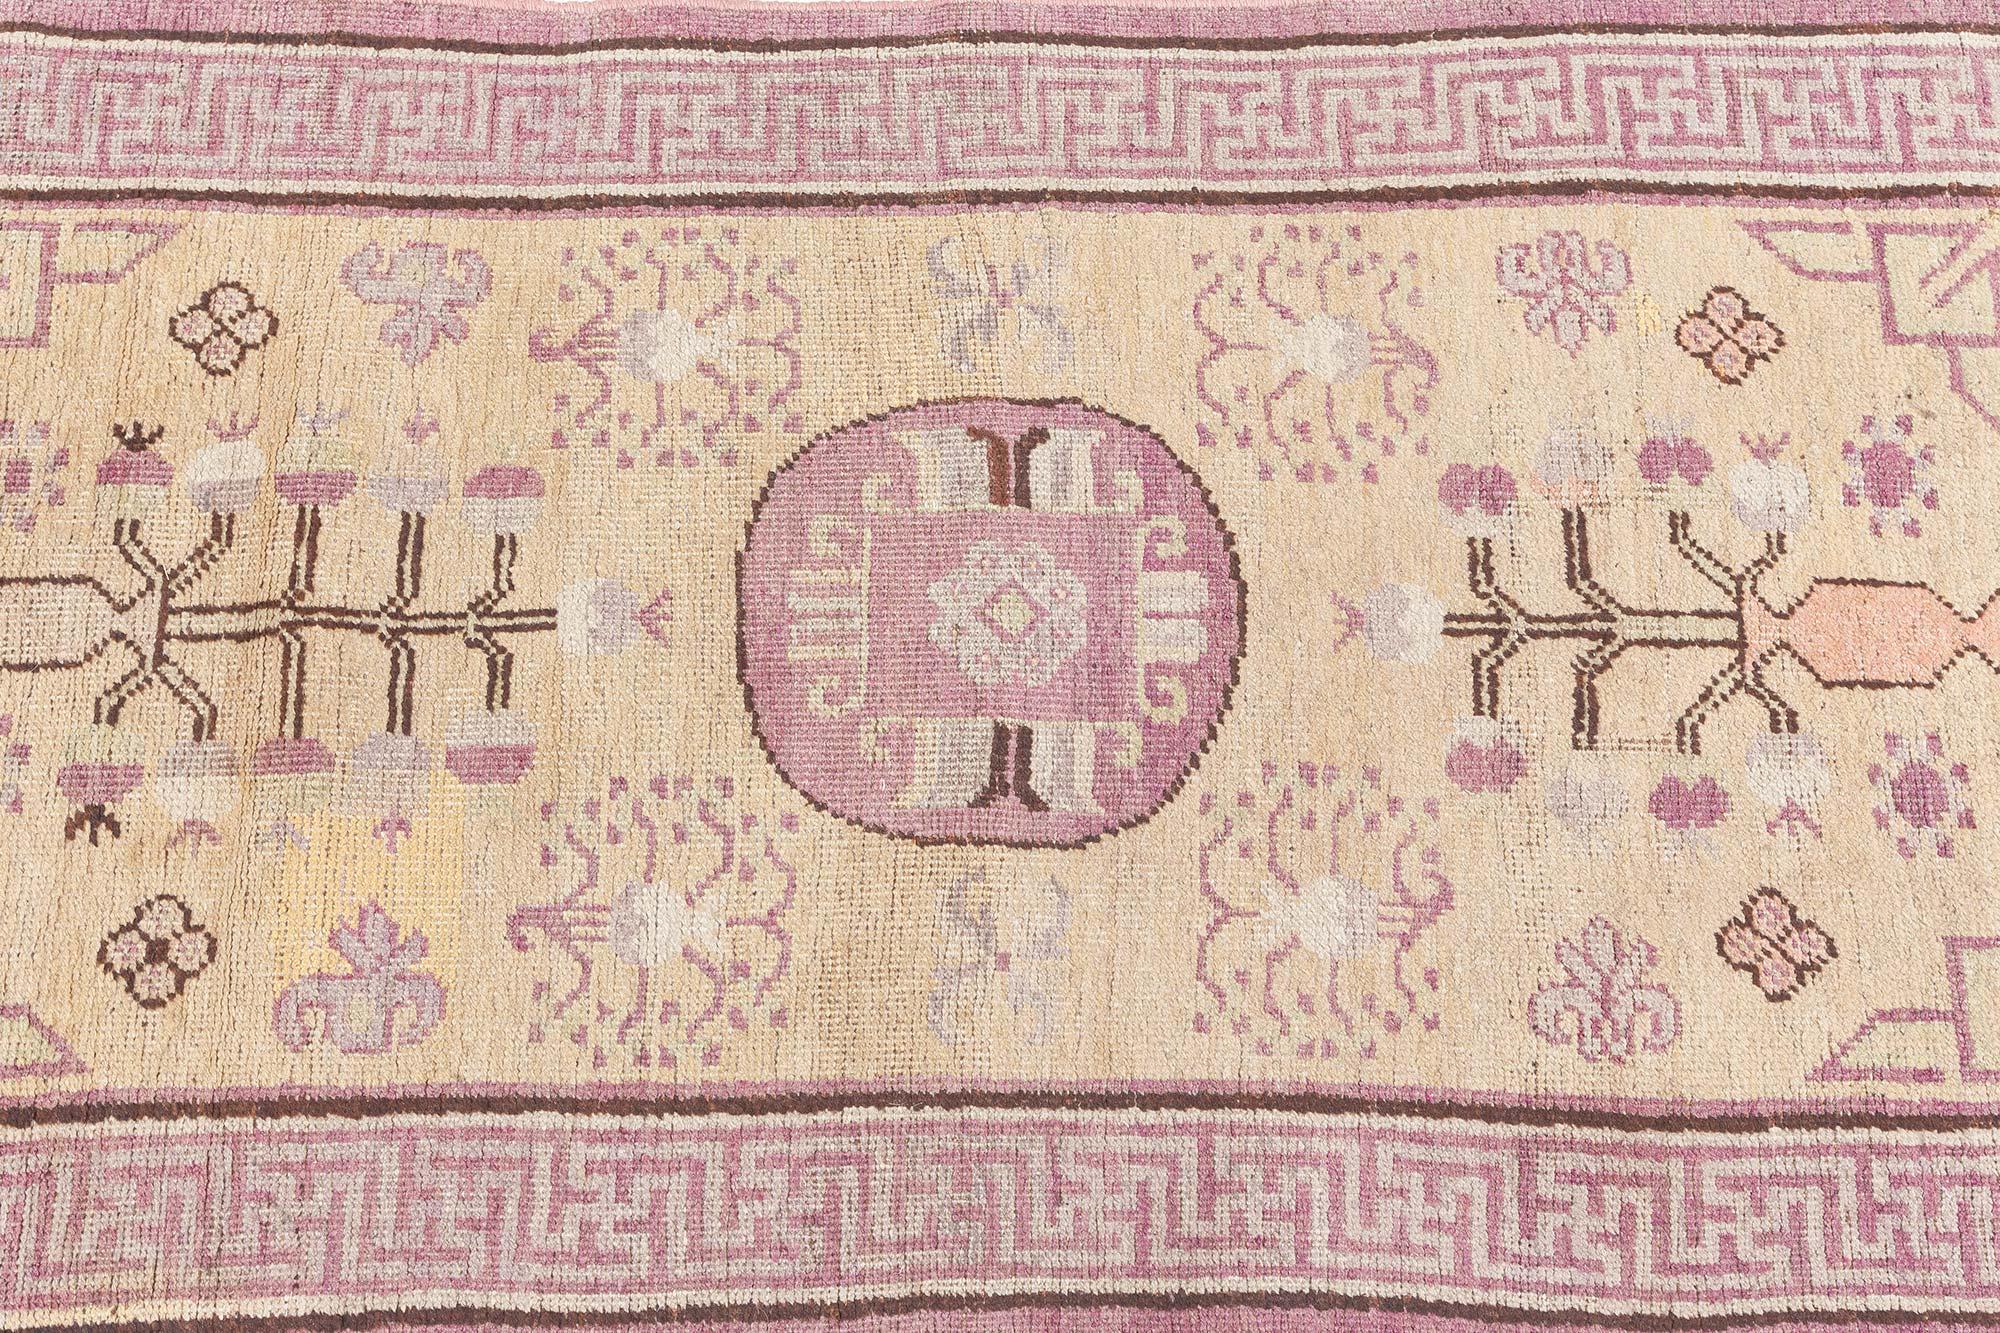 Vintage Samarkand (Khotan) Handmade Wool Carpet
Size: 2'7